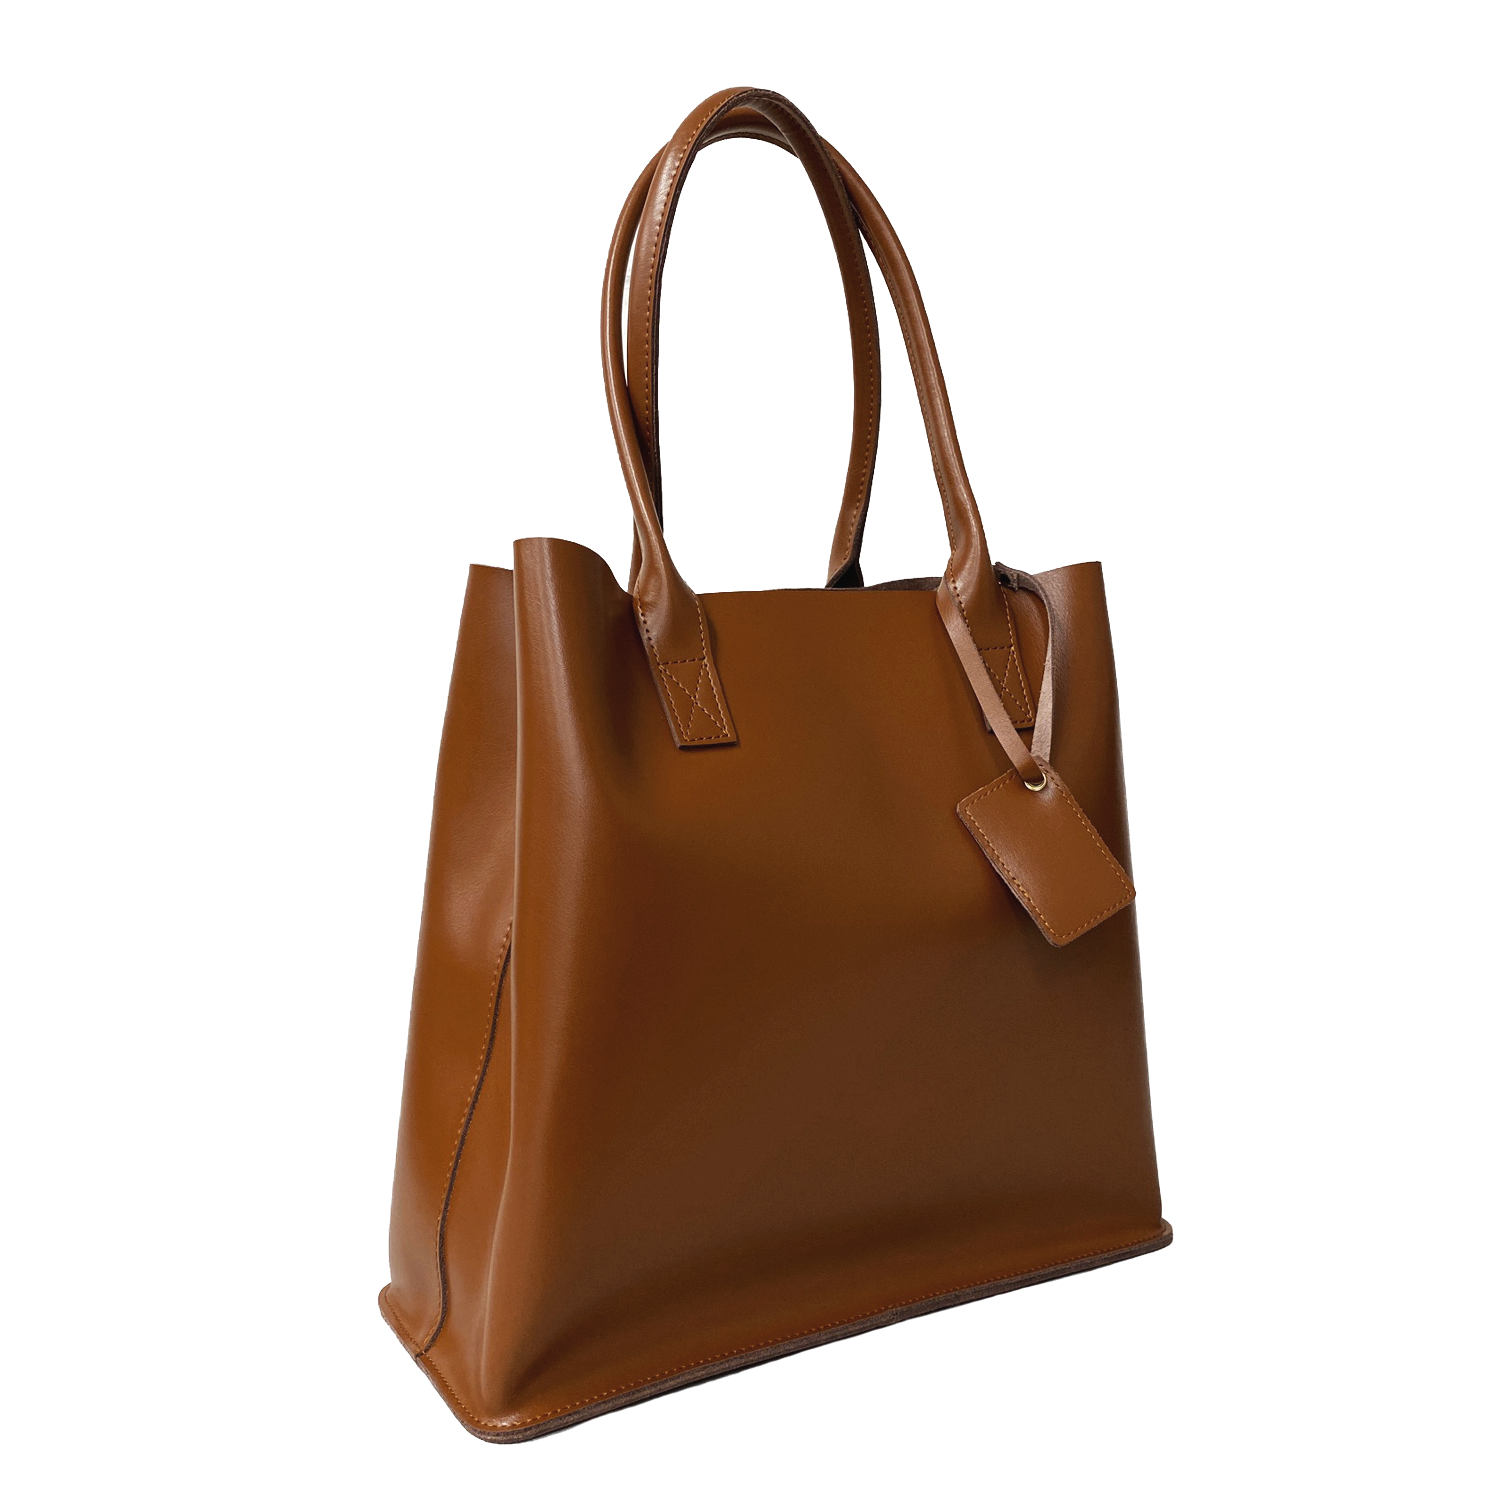 BIRCHGROVE - Women's Tan Genuine Leather Tote Bag Bag Addison Road